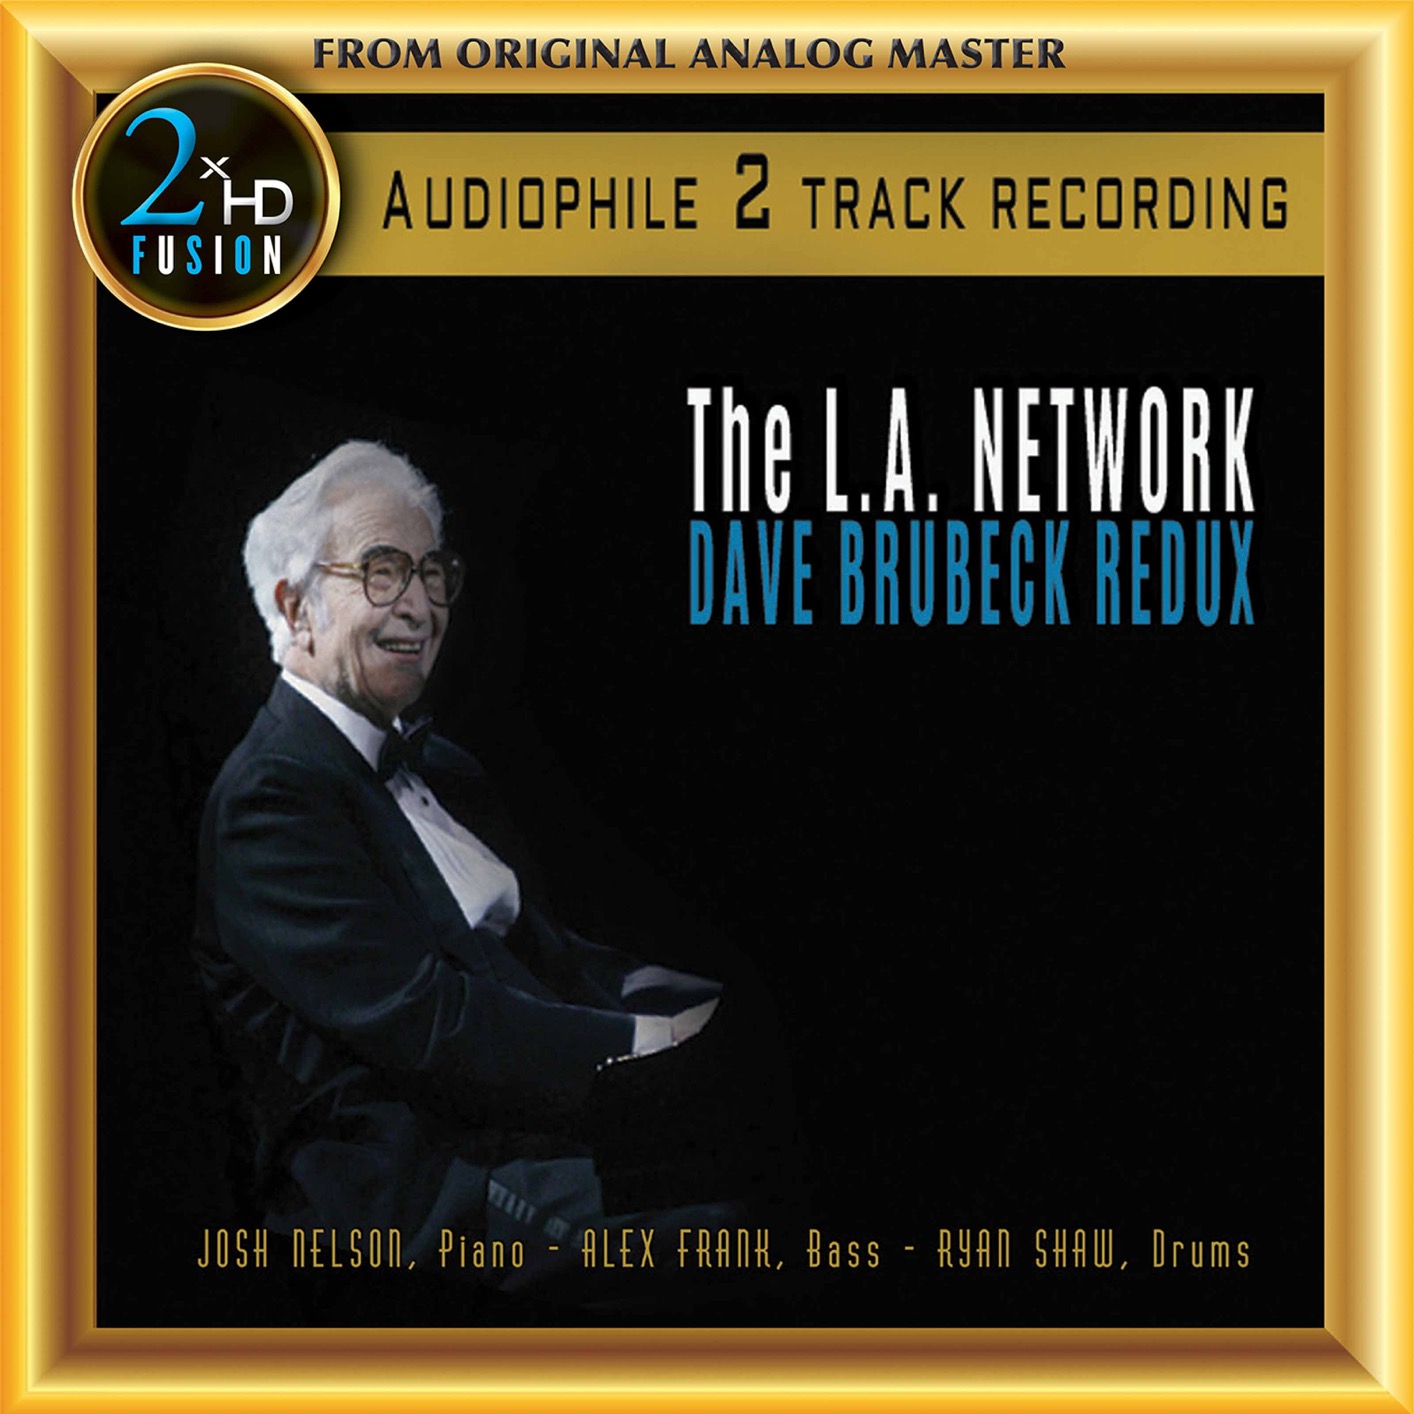 Josh Nelson, Alex Frank & Ryan Shaw - The L.A. Network, DAVE BRUBECK REDUX (Remastered) (2019) [FLAC 24bit/192kHz]